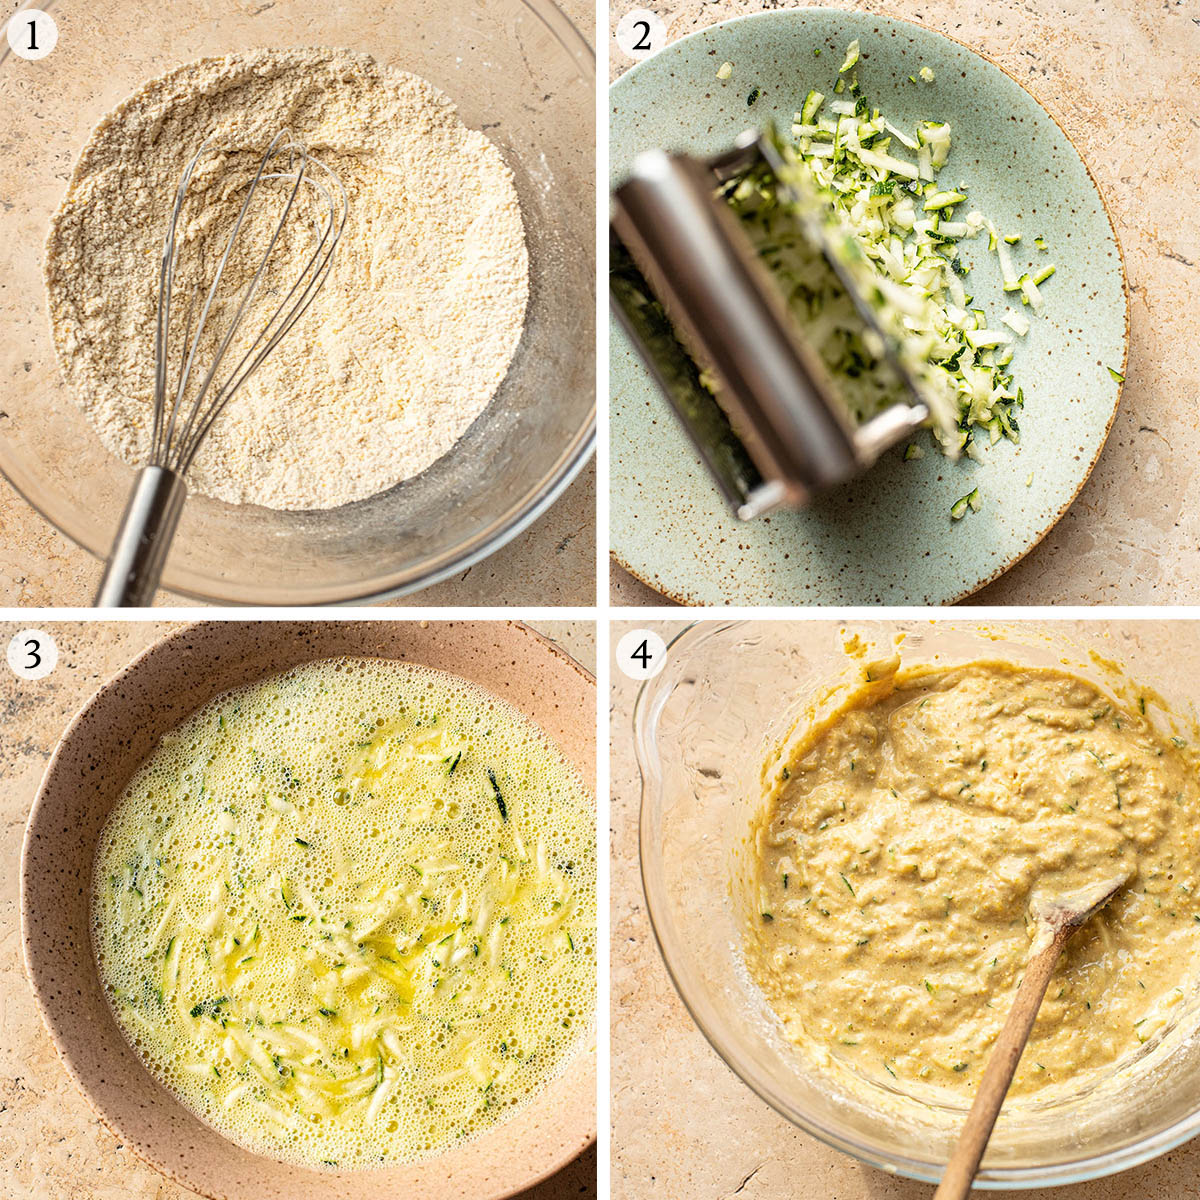 Zucchini cornbread steps 1 to 4.